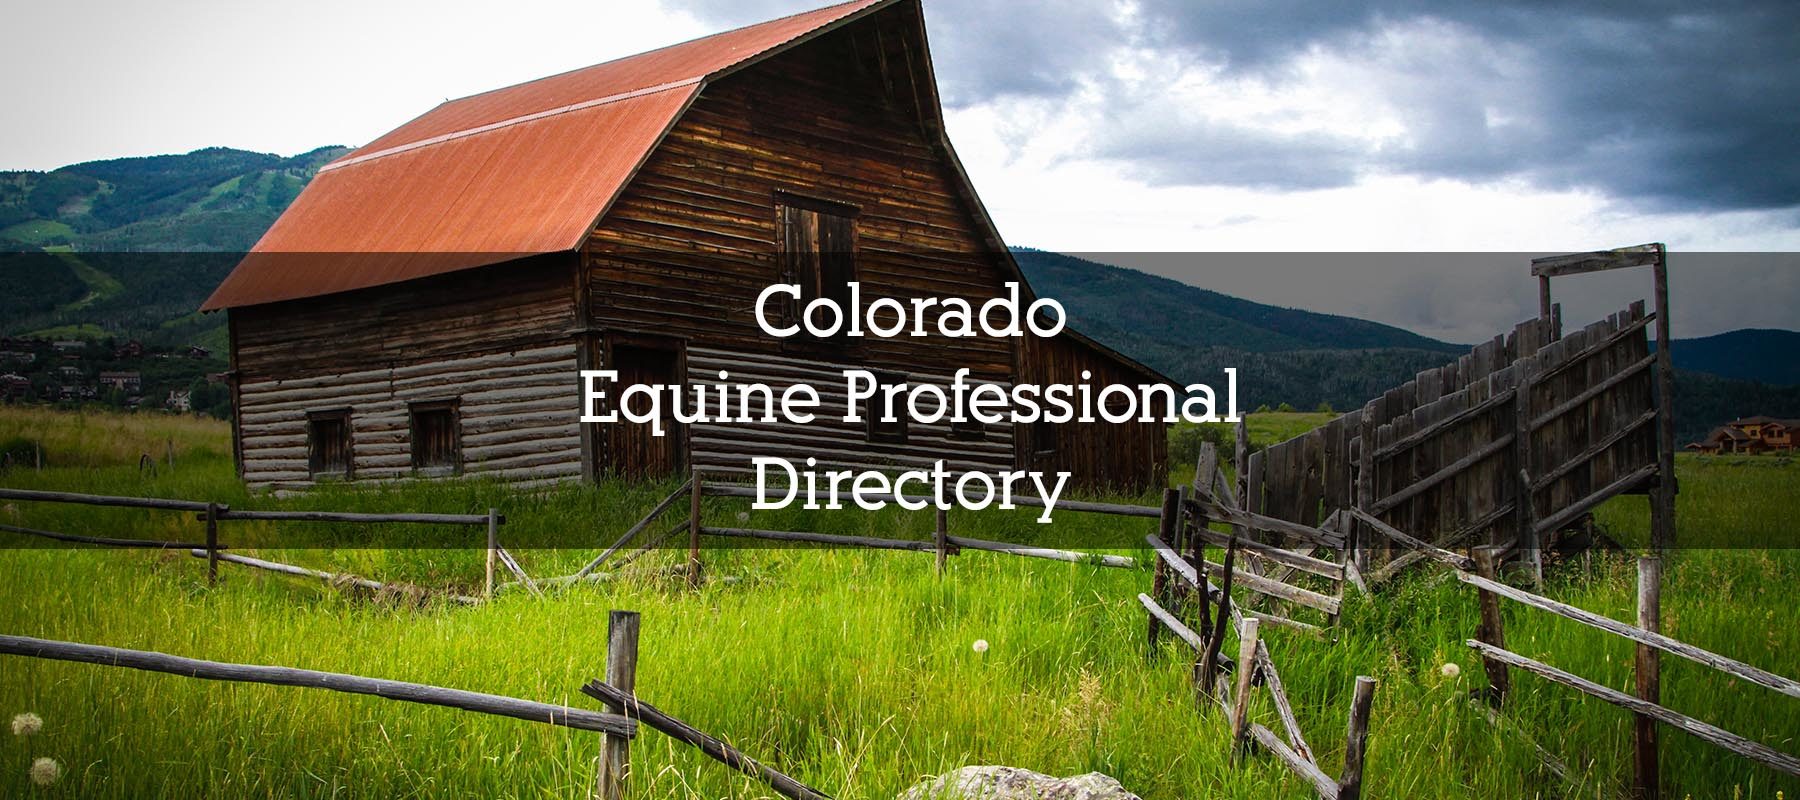 Colorado Equine Professional Directory